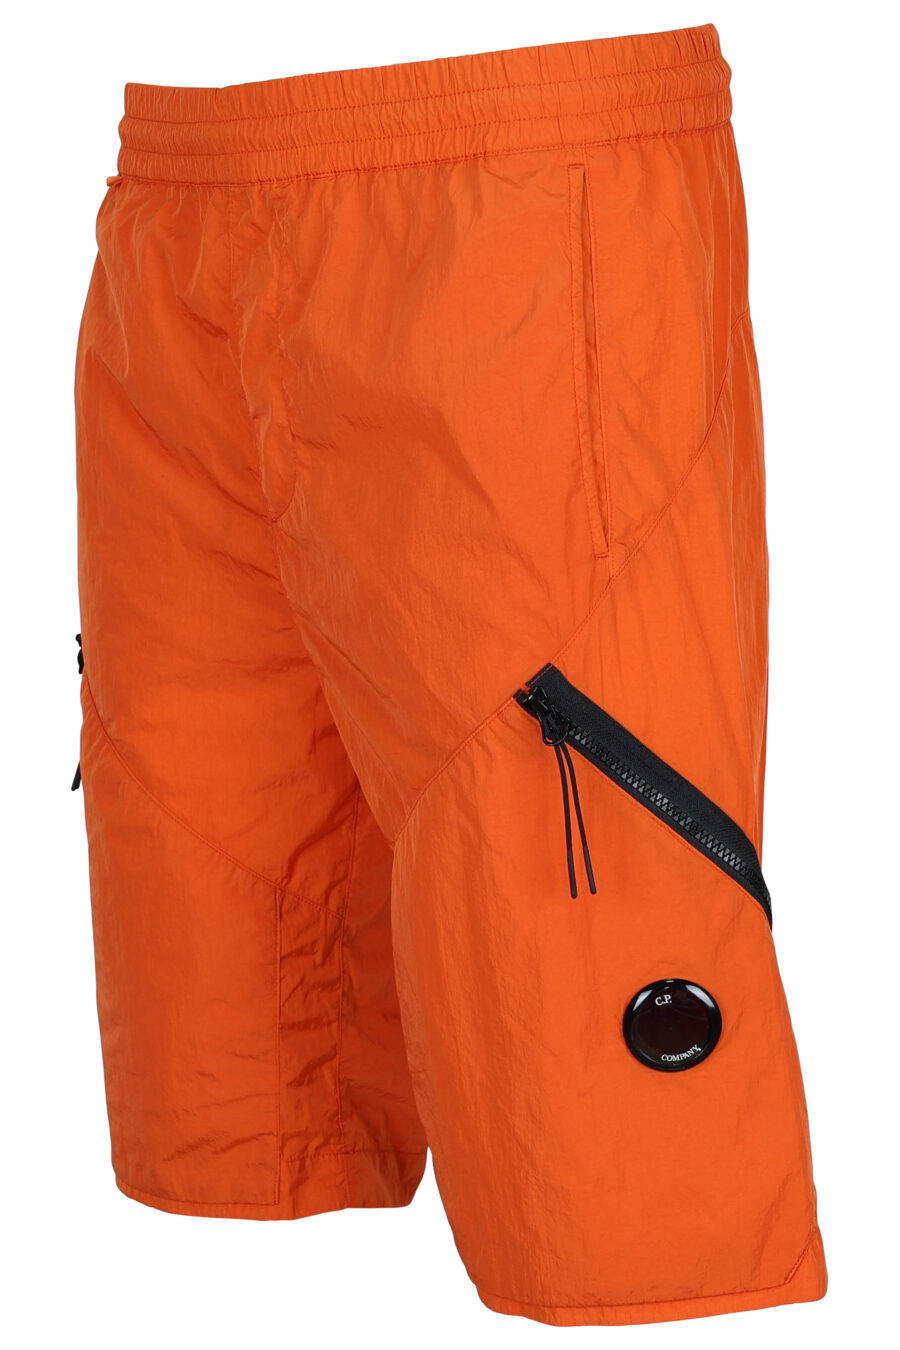 Pantalón corto naranja con cremallera diagonal y logo lente - 7620943518290 1